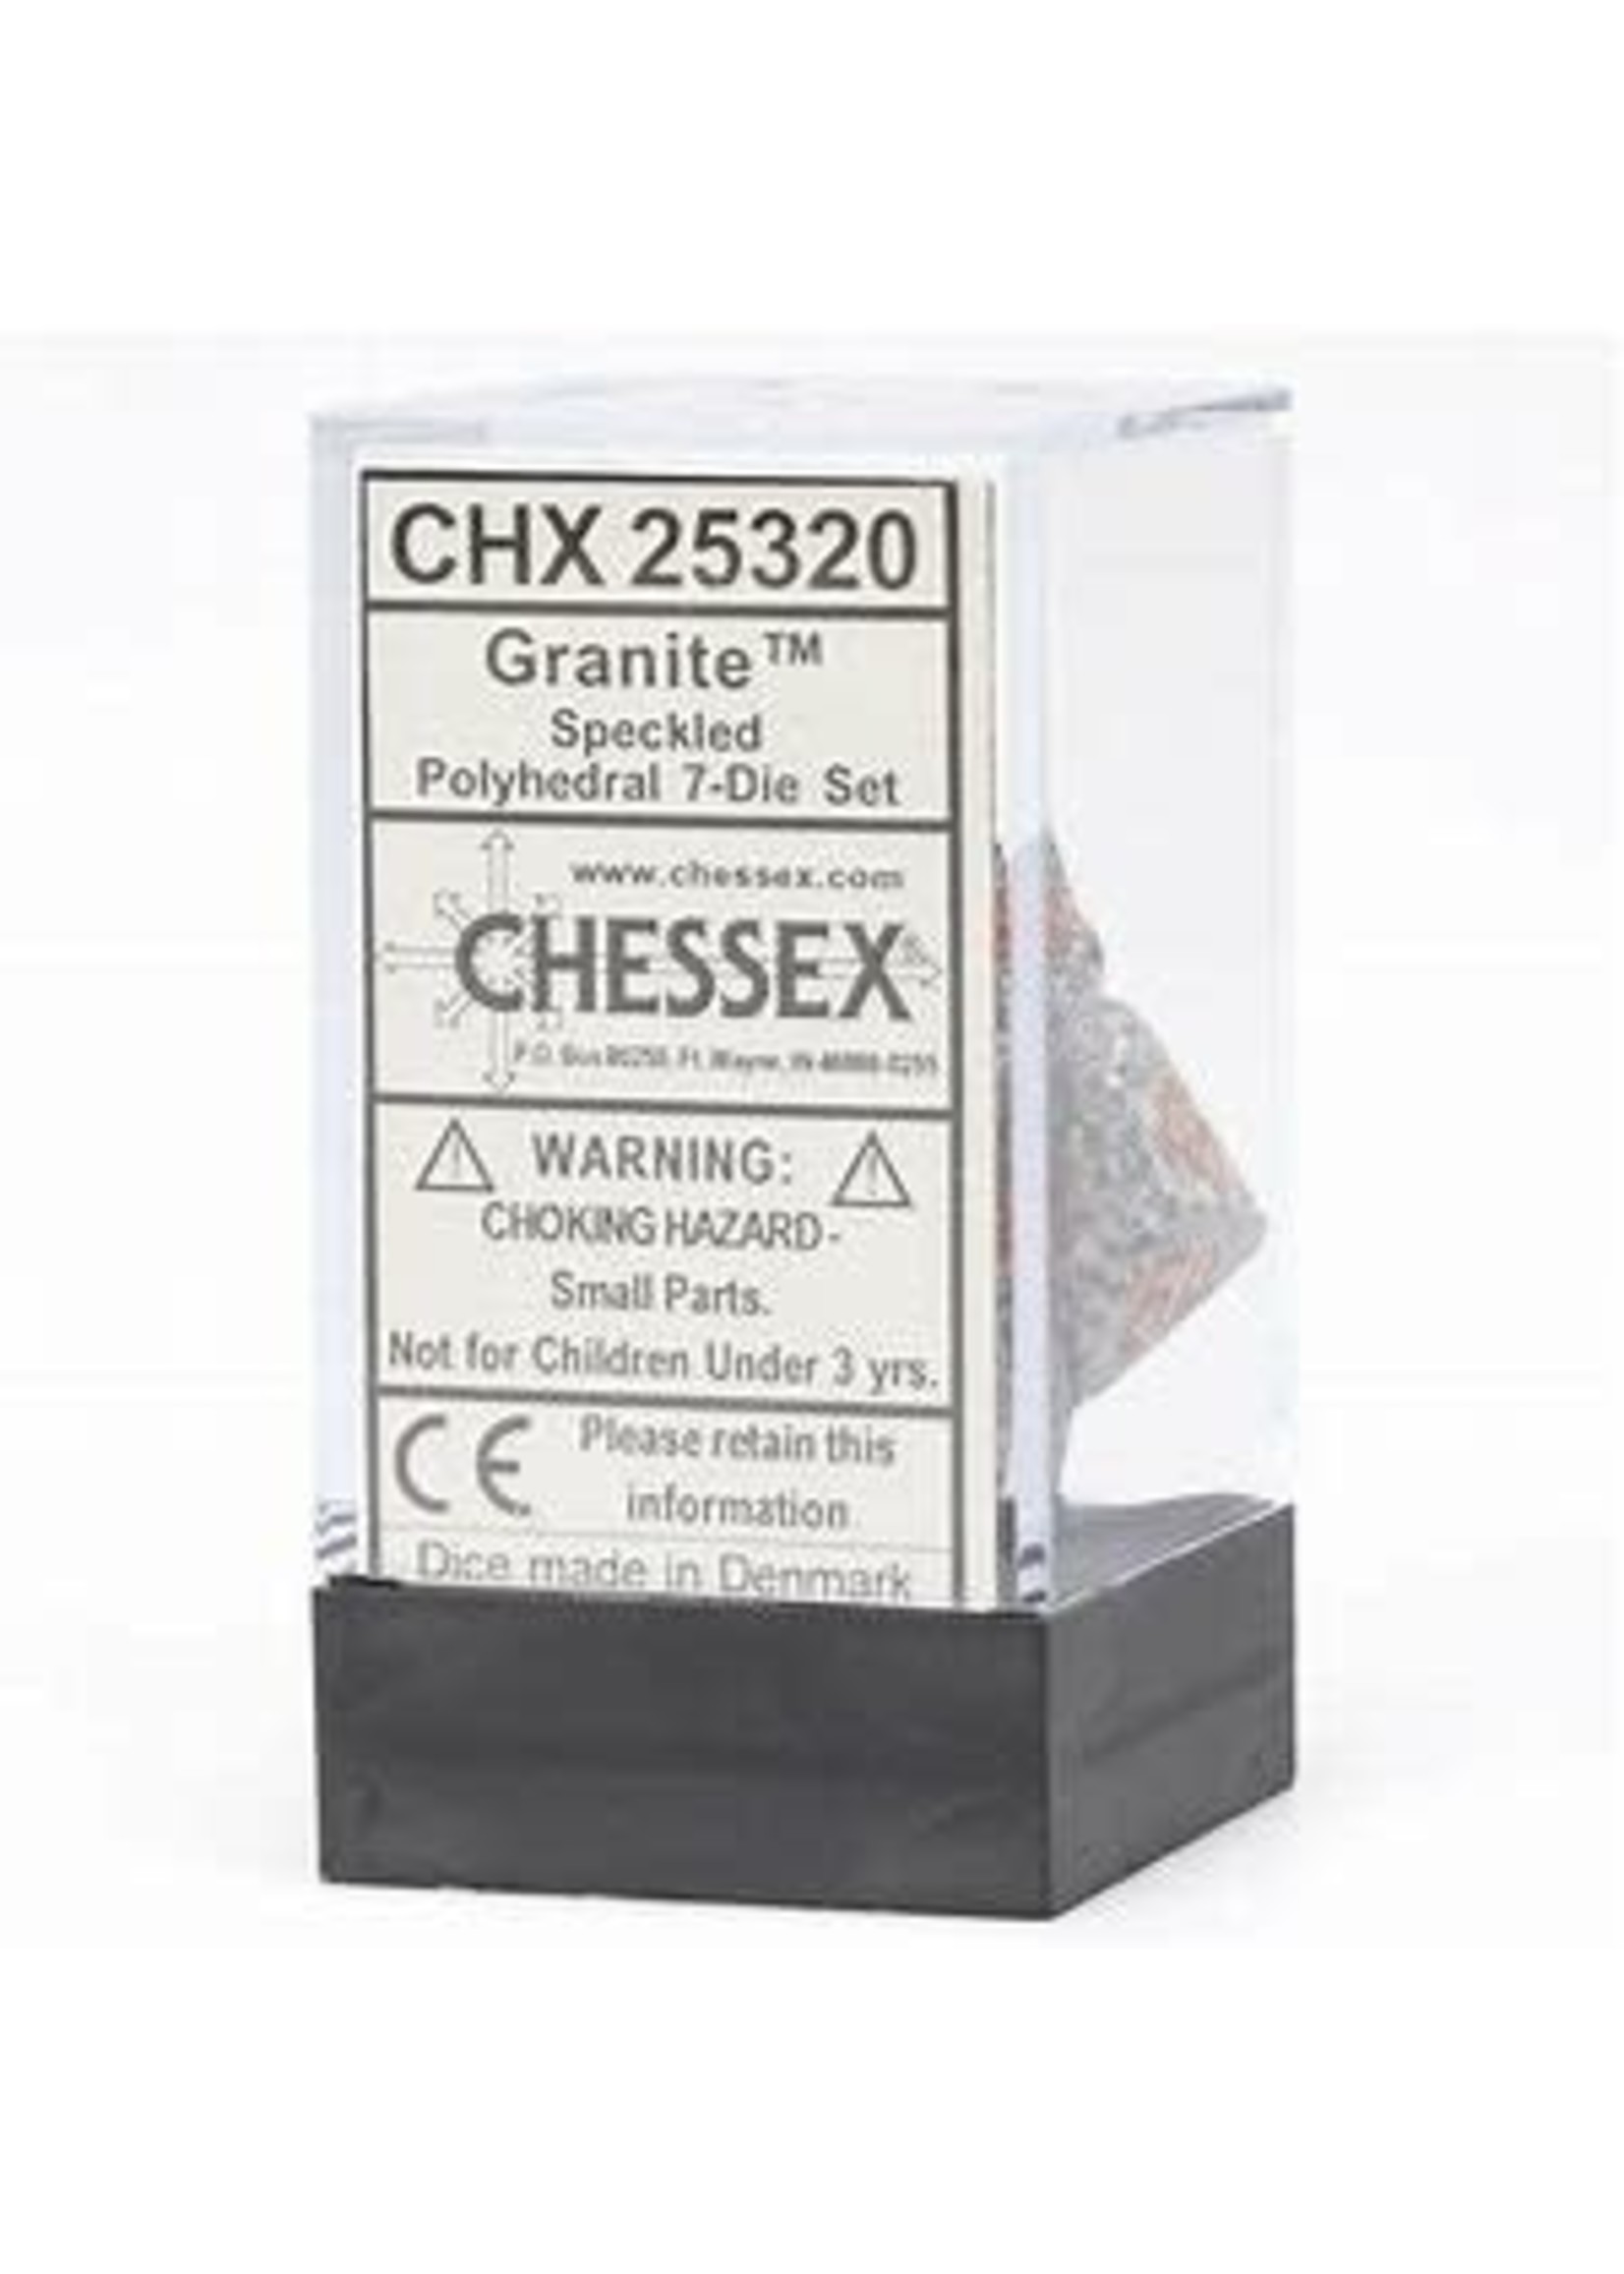 Chessex Speckled Poly 7 set: Granite